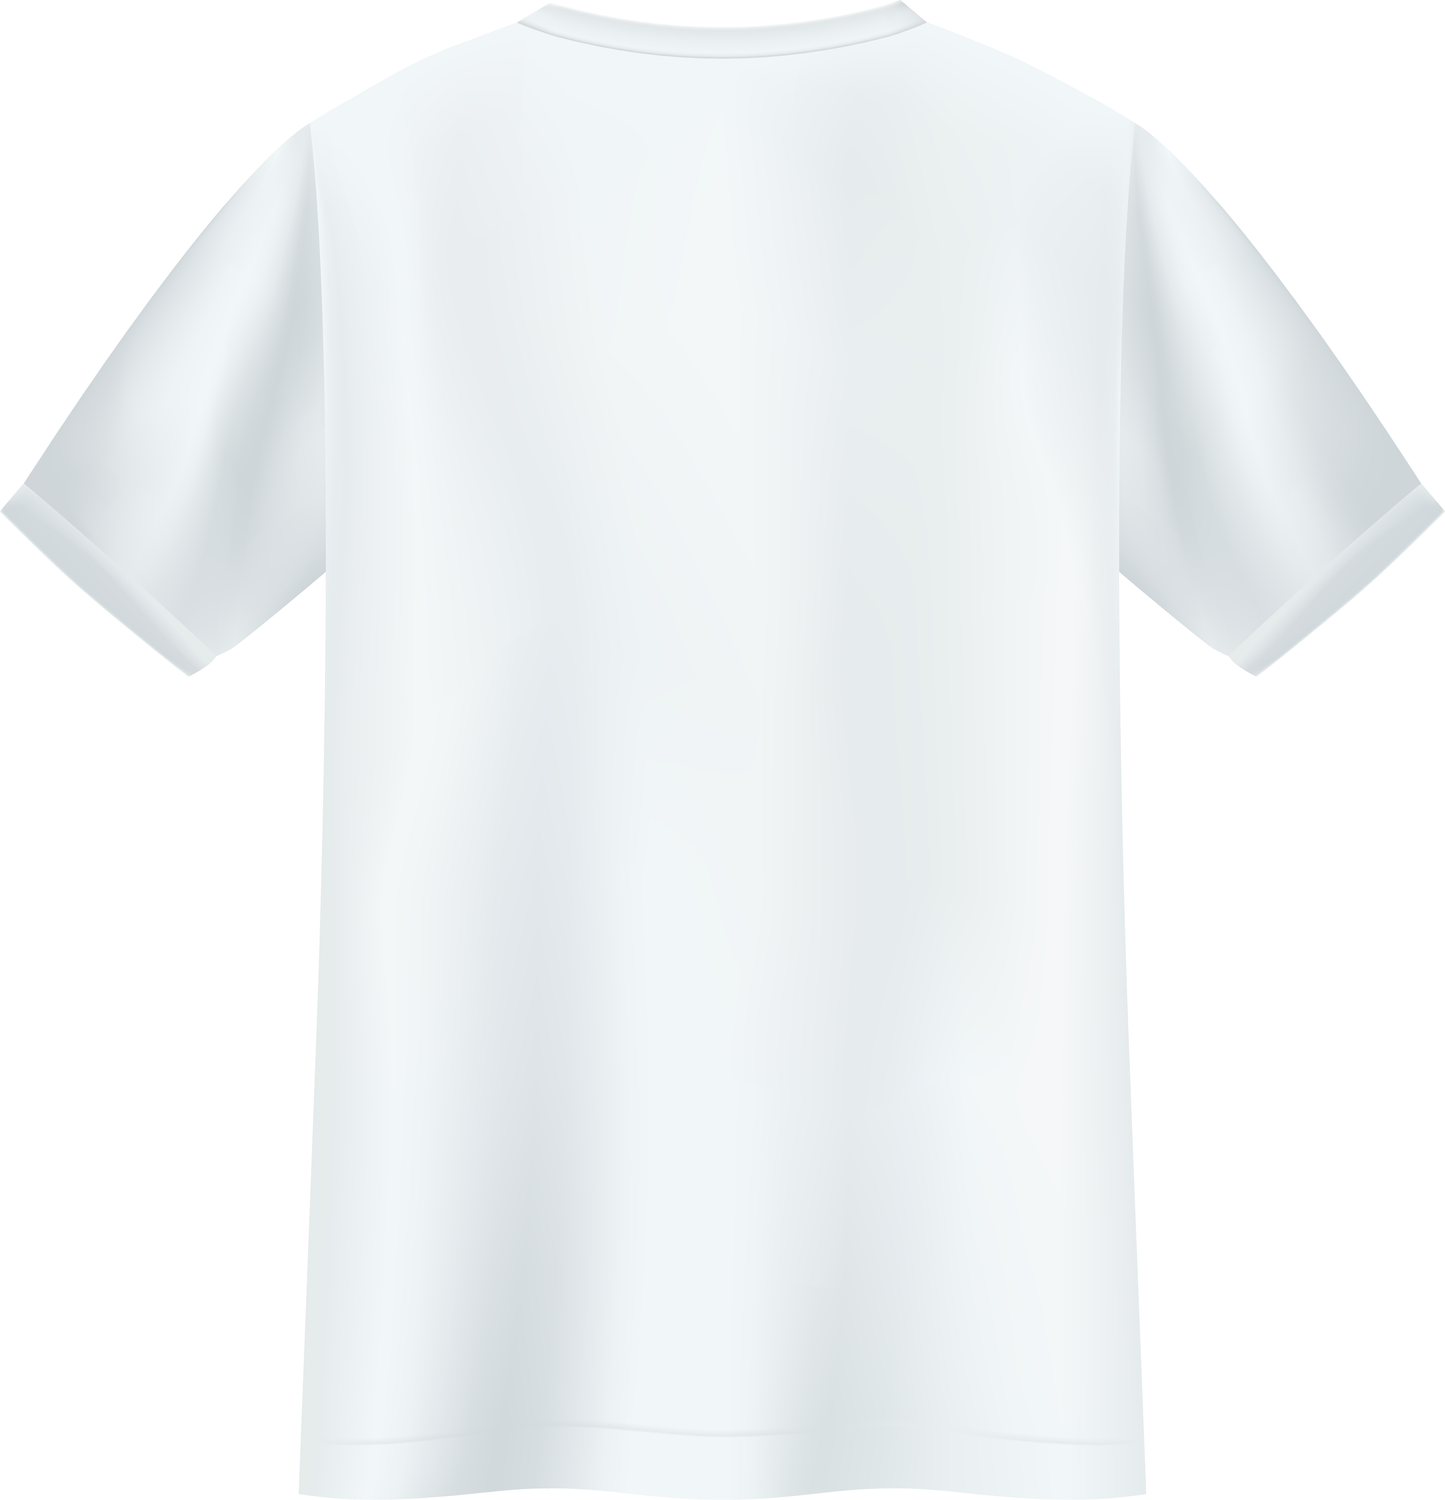 ARENAS White T-Shirt